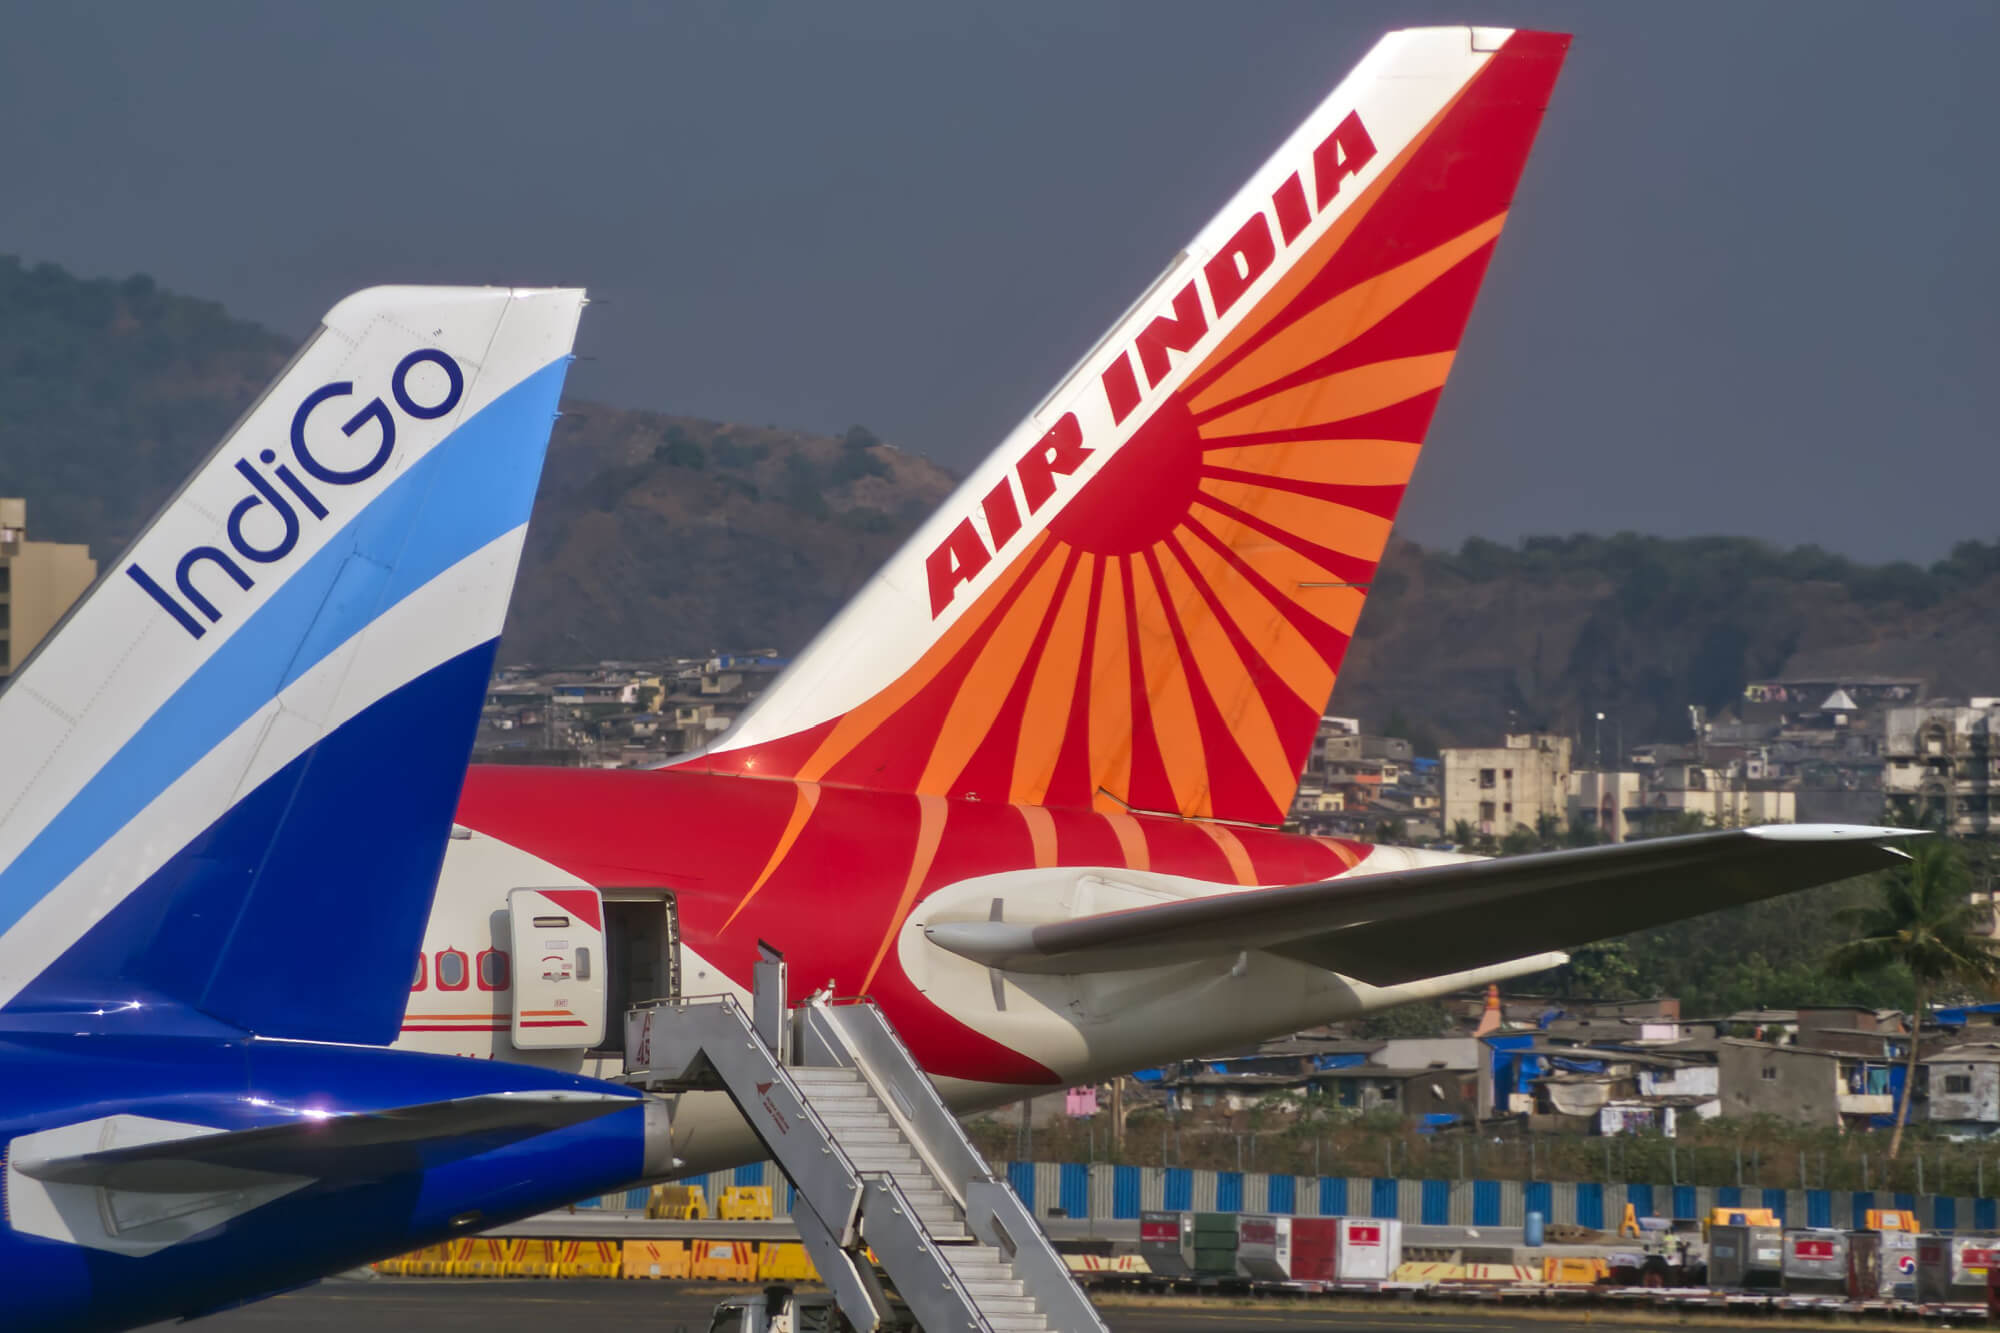 IndiGo and Air India aircraft in Mumbai